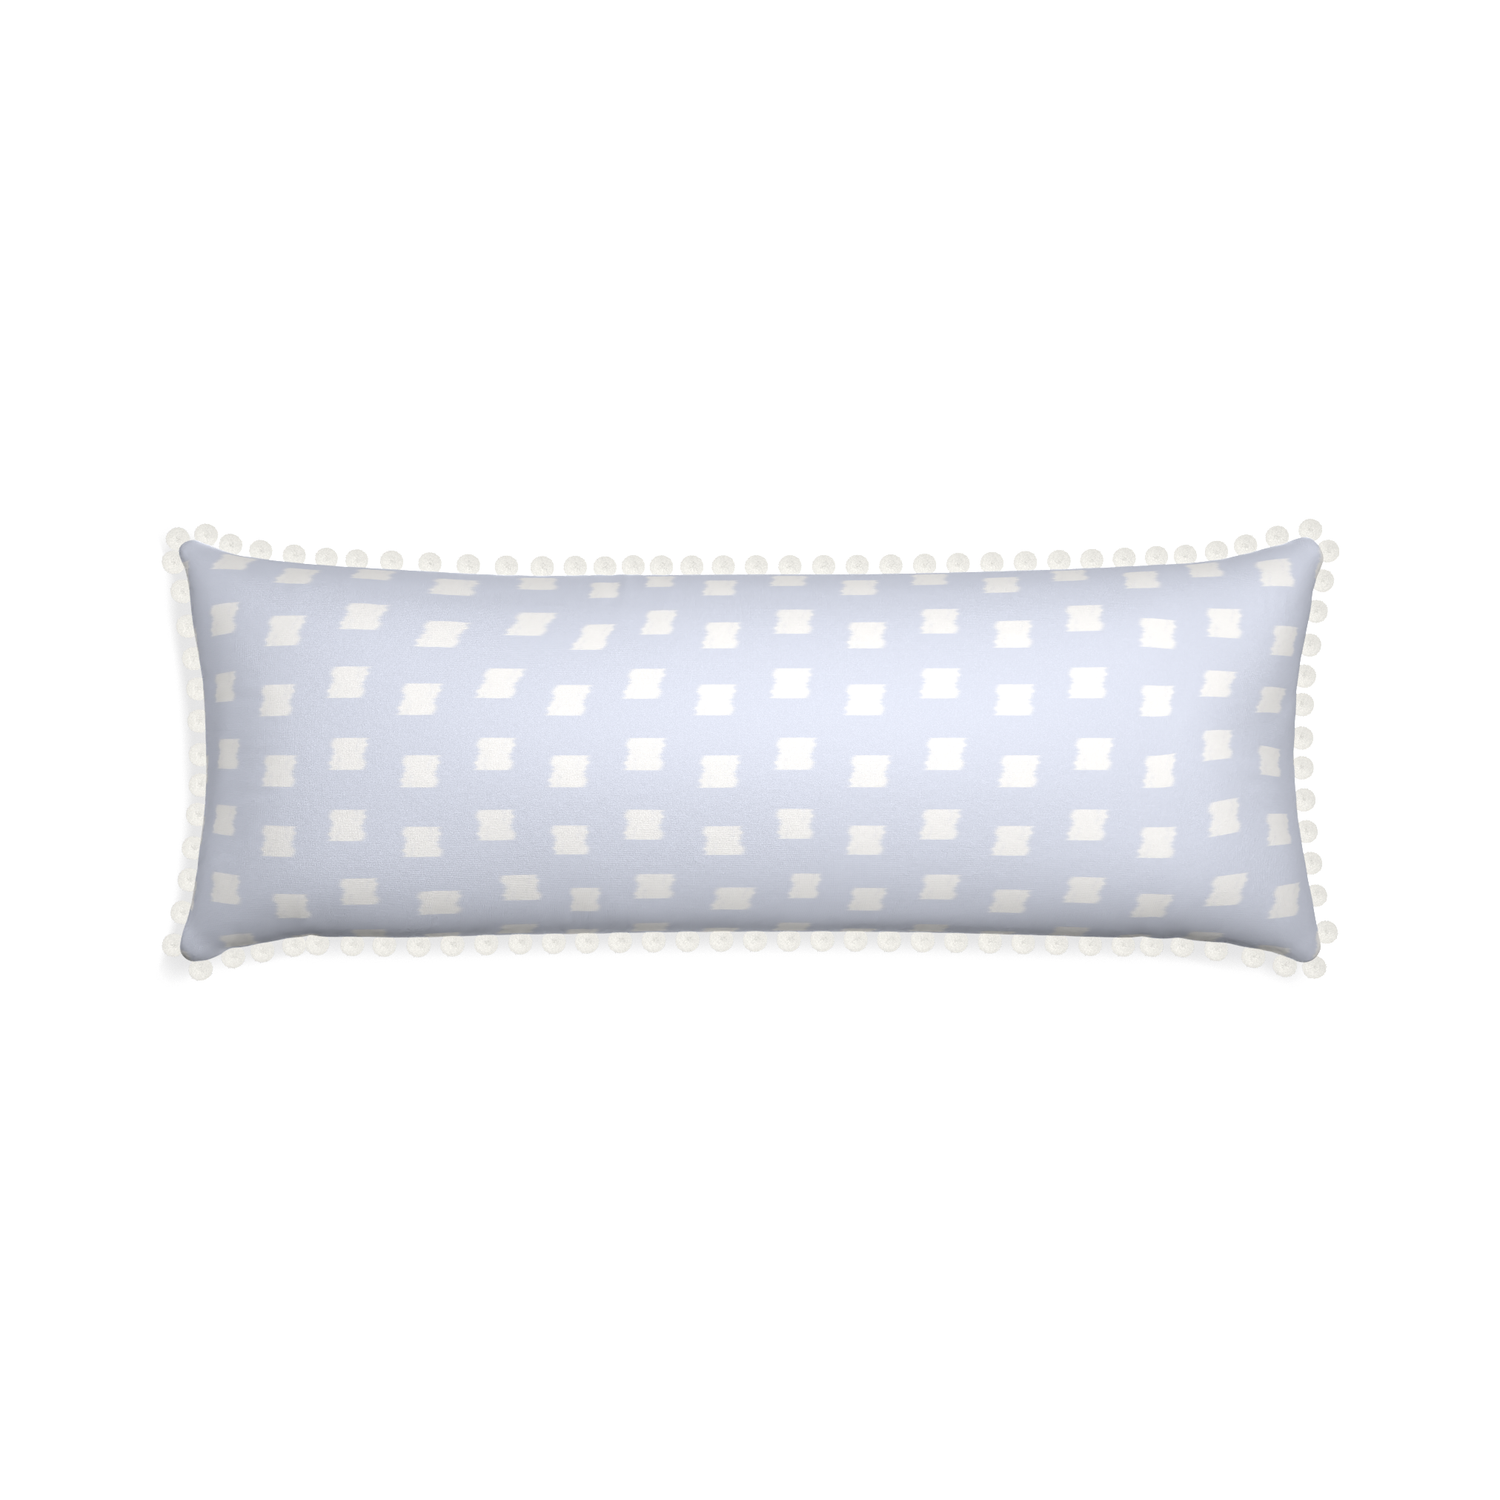 Xl-lumbar denton custom pillow with snow pom pom on white background